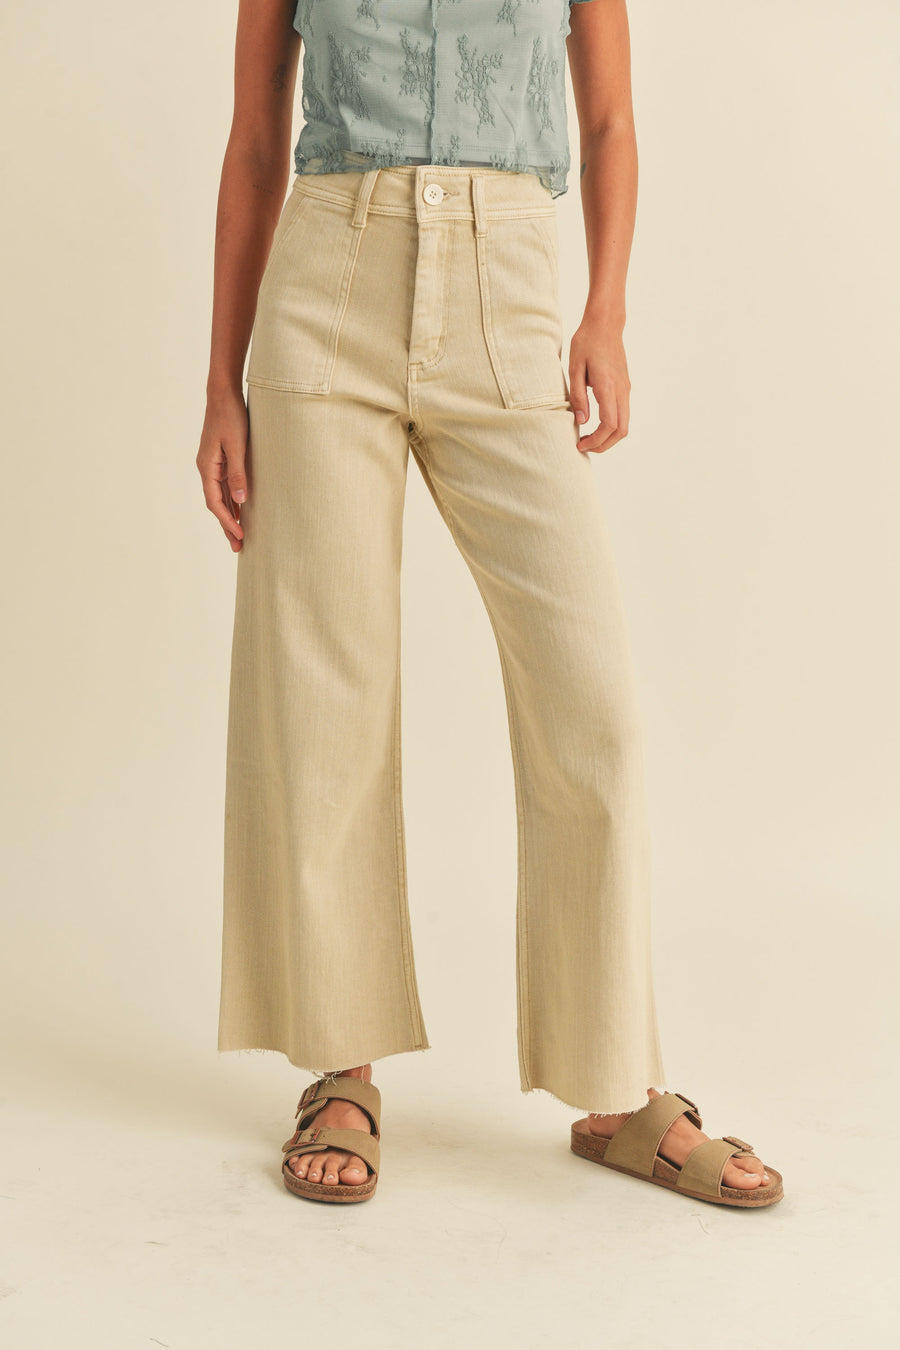 Cotton Stretch wide leg pants/ 98% cotton, 2% spandex 